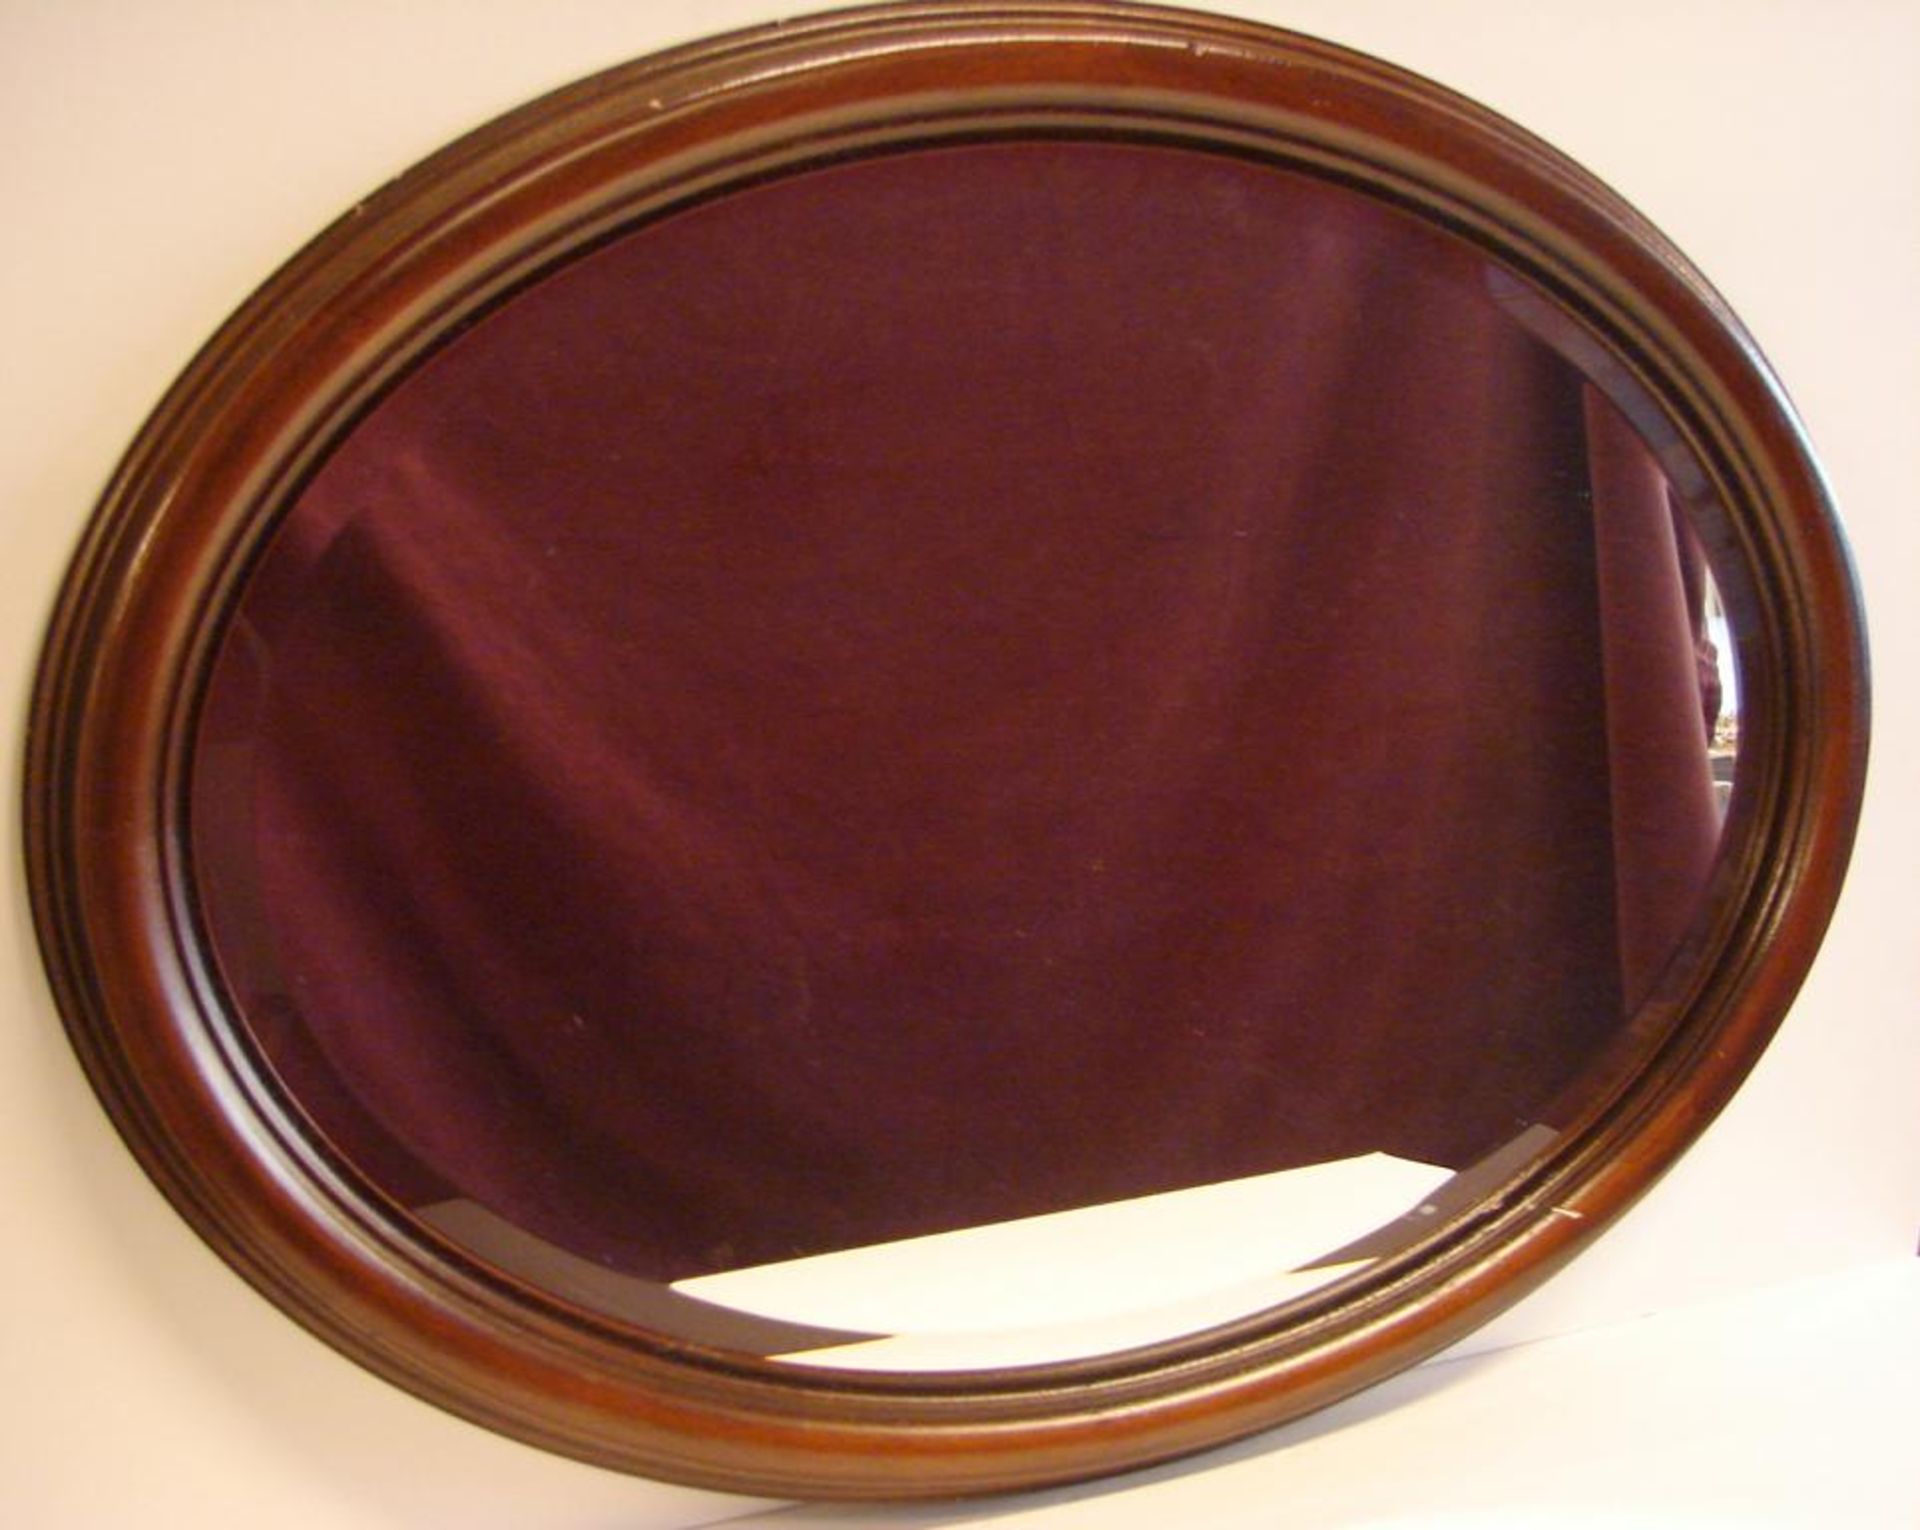 Spiegel, Mahagoni, oval, mit Facettenschliff, ca. 78 x 61 cm